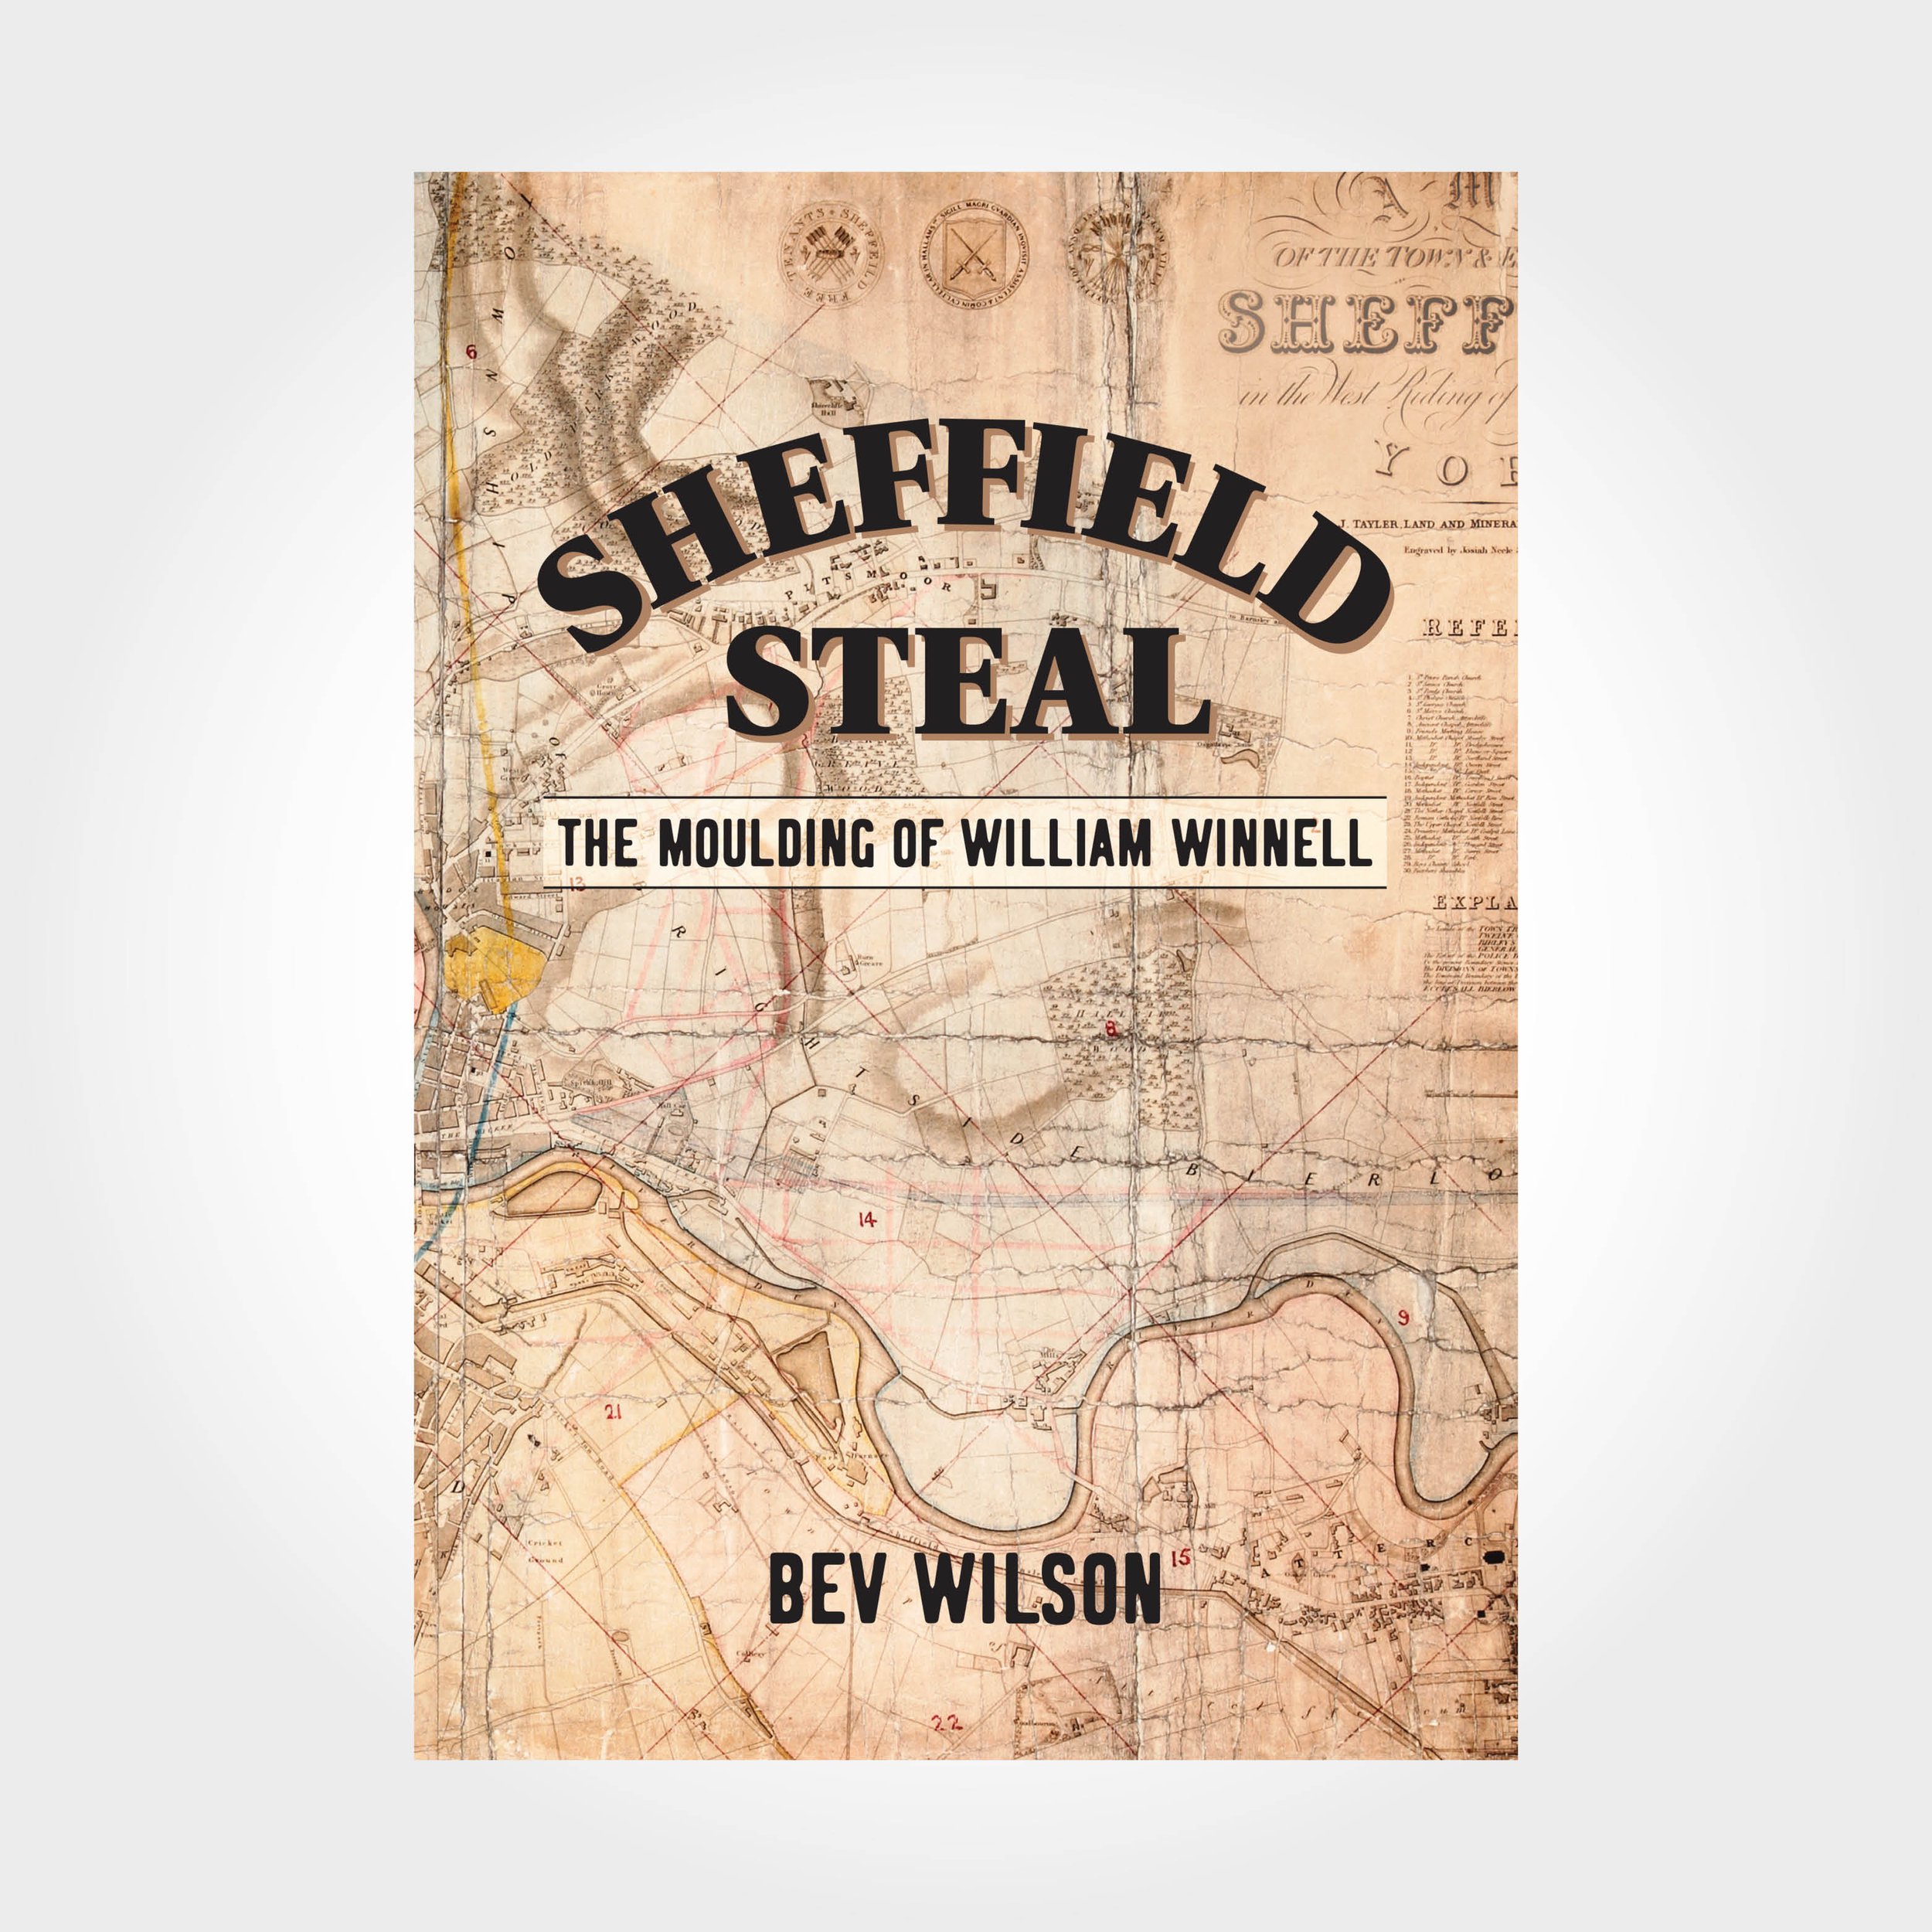 Sheffield Steal